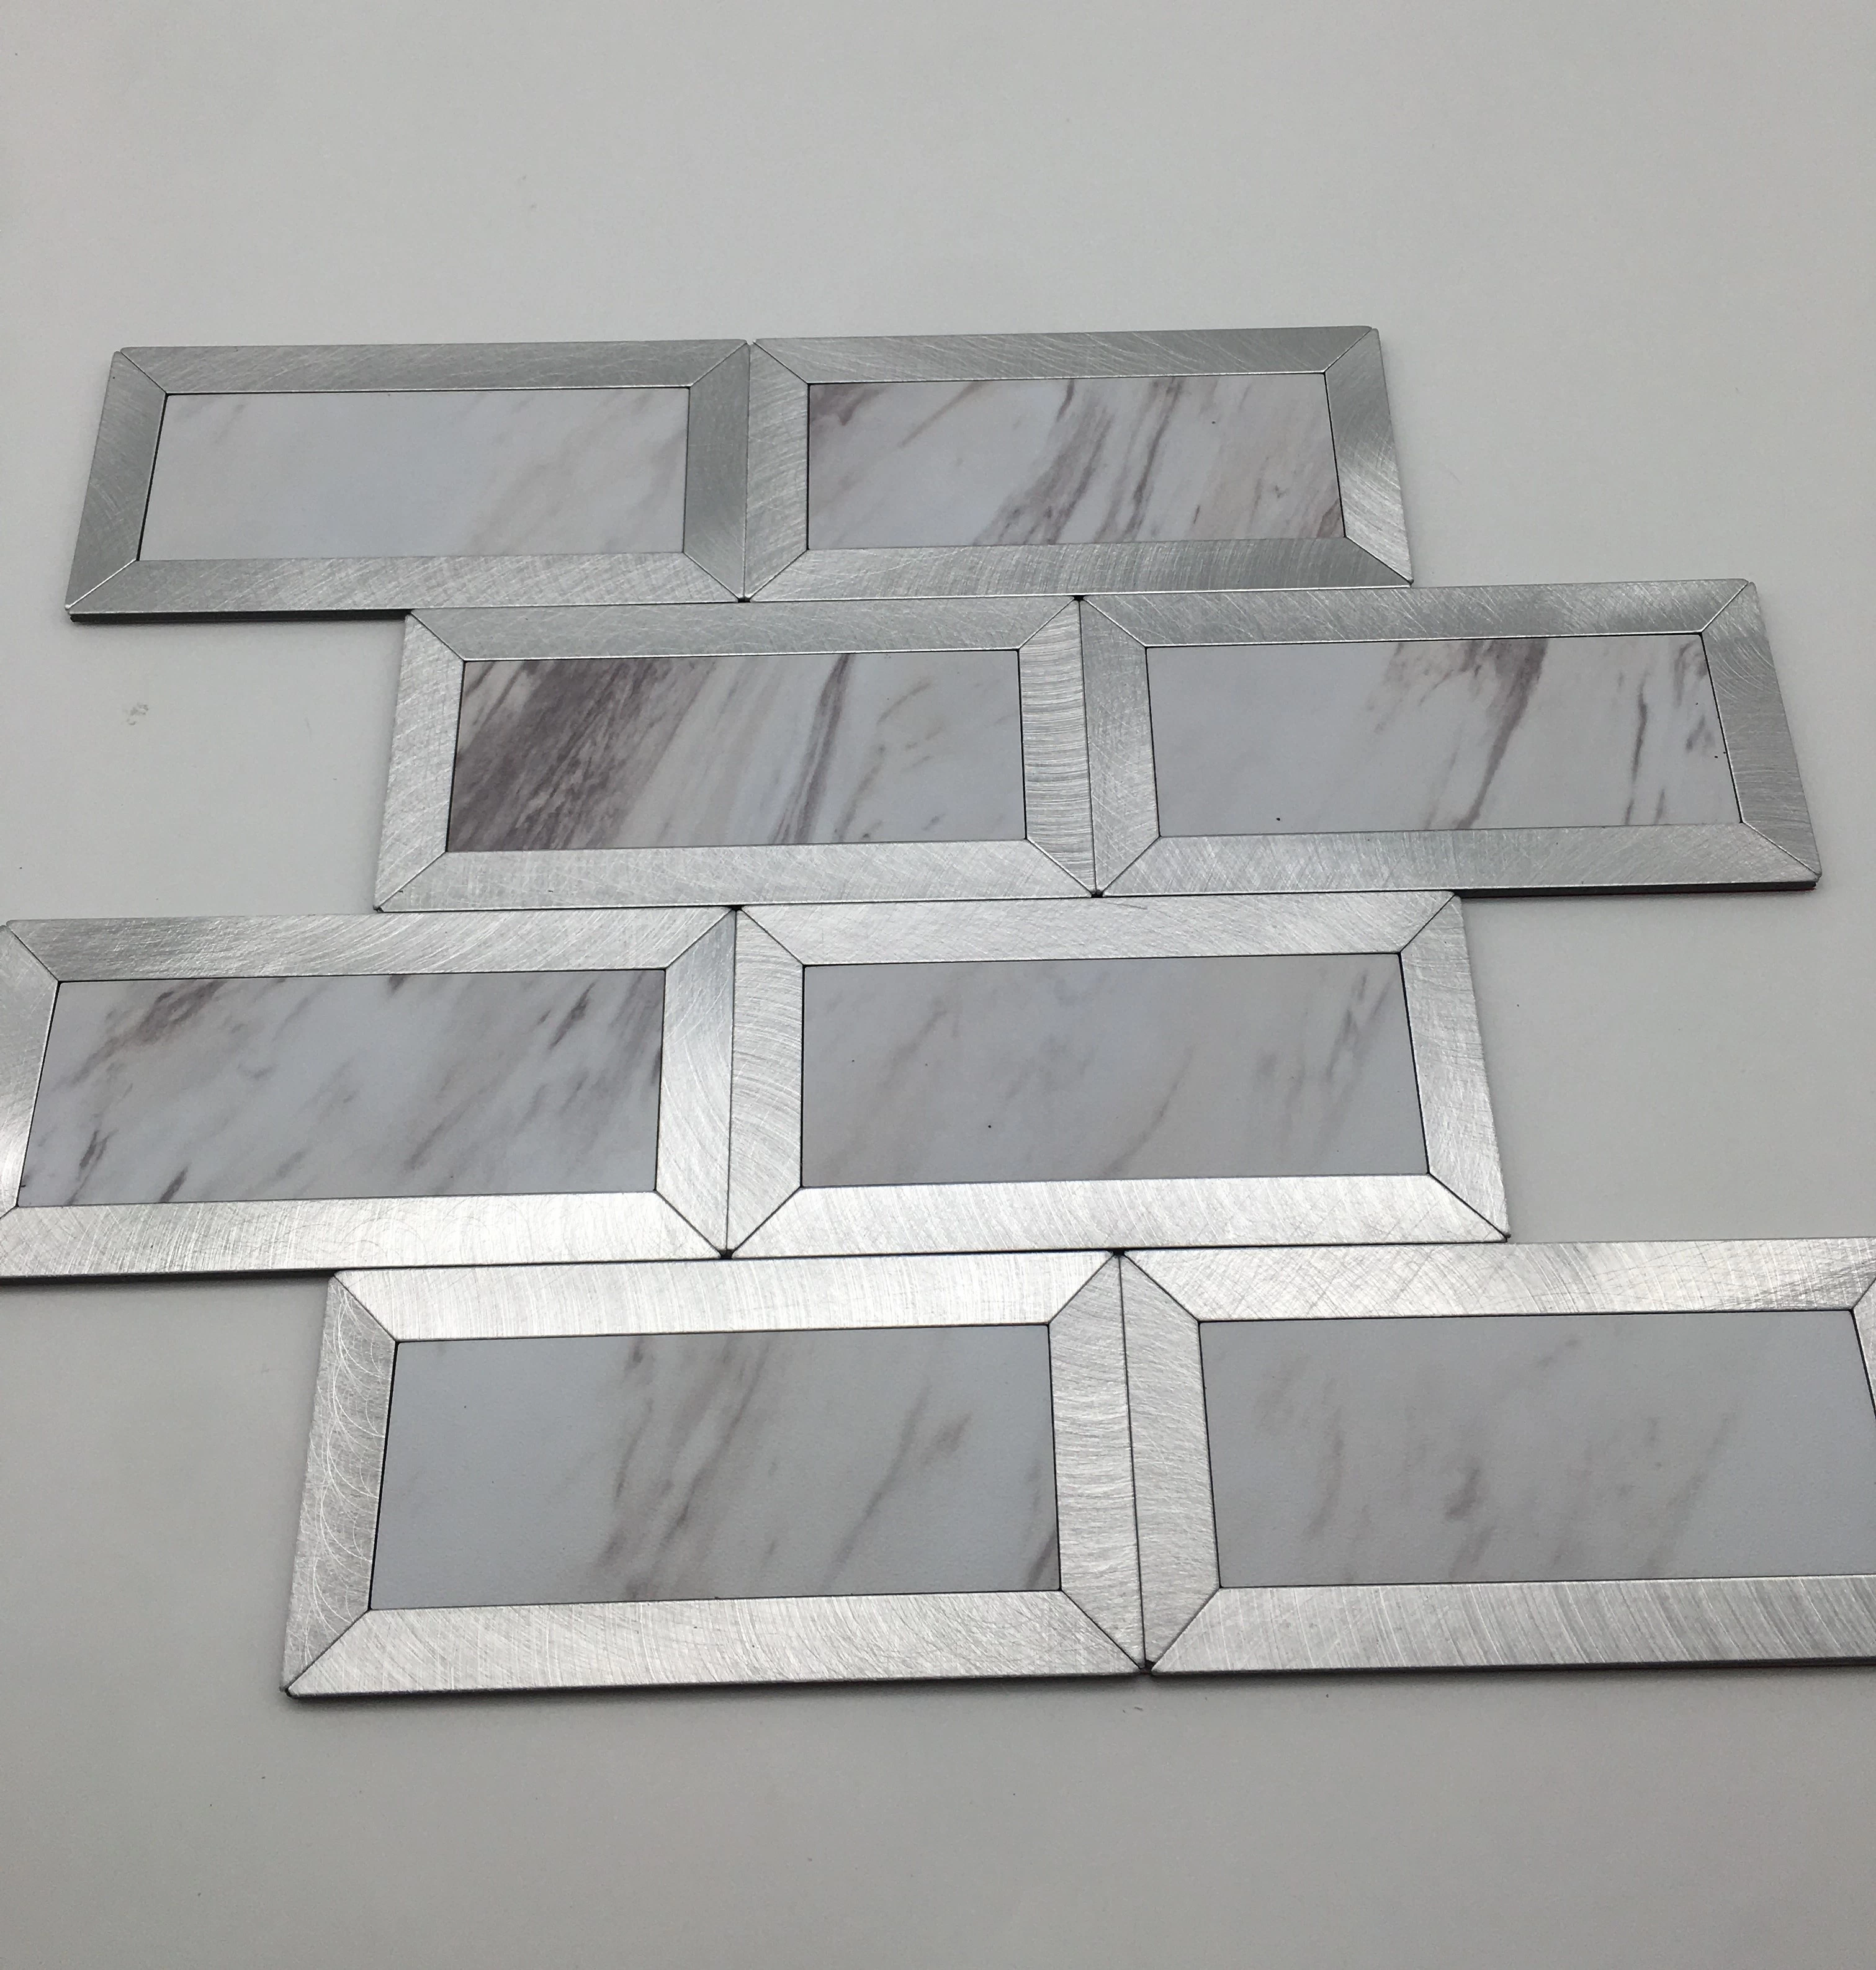 Self Adhesive Silver and white carrara Waterproof PVC Peel And Stick Tiles Mosaic For Wall Backsplash